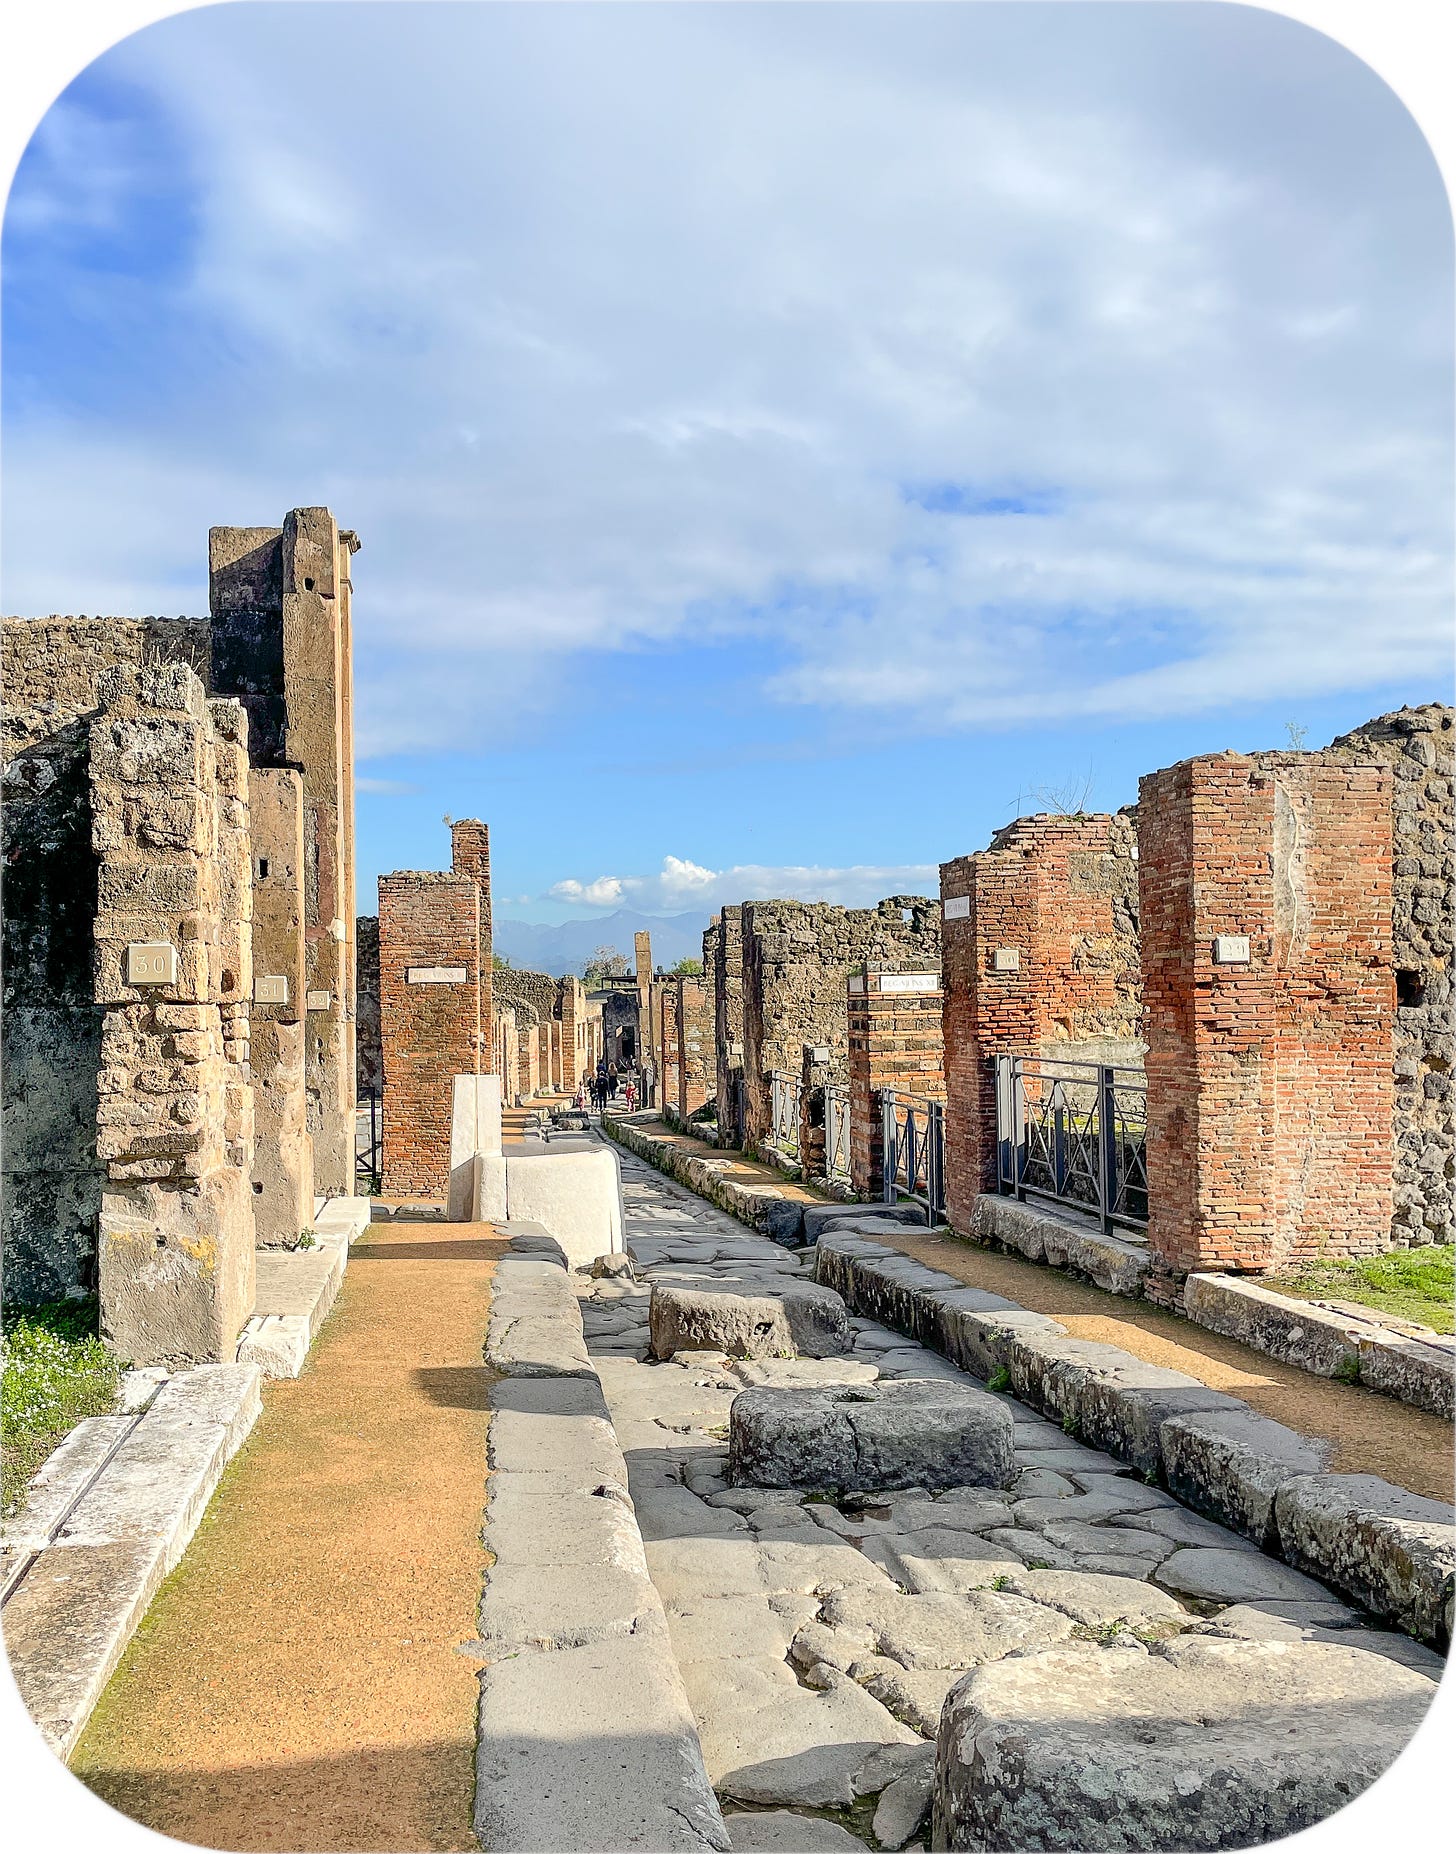 Excavated streets in Pompeii, Itally